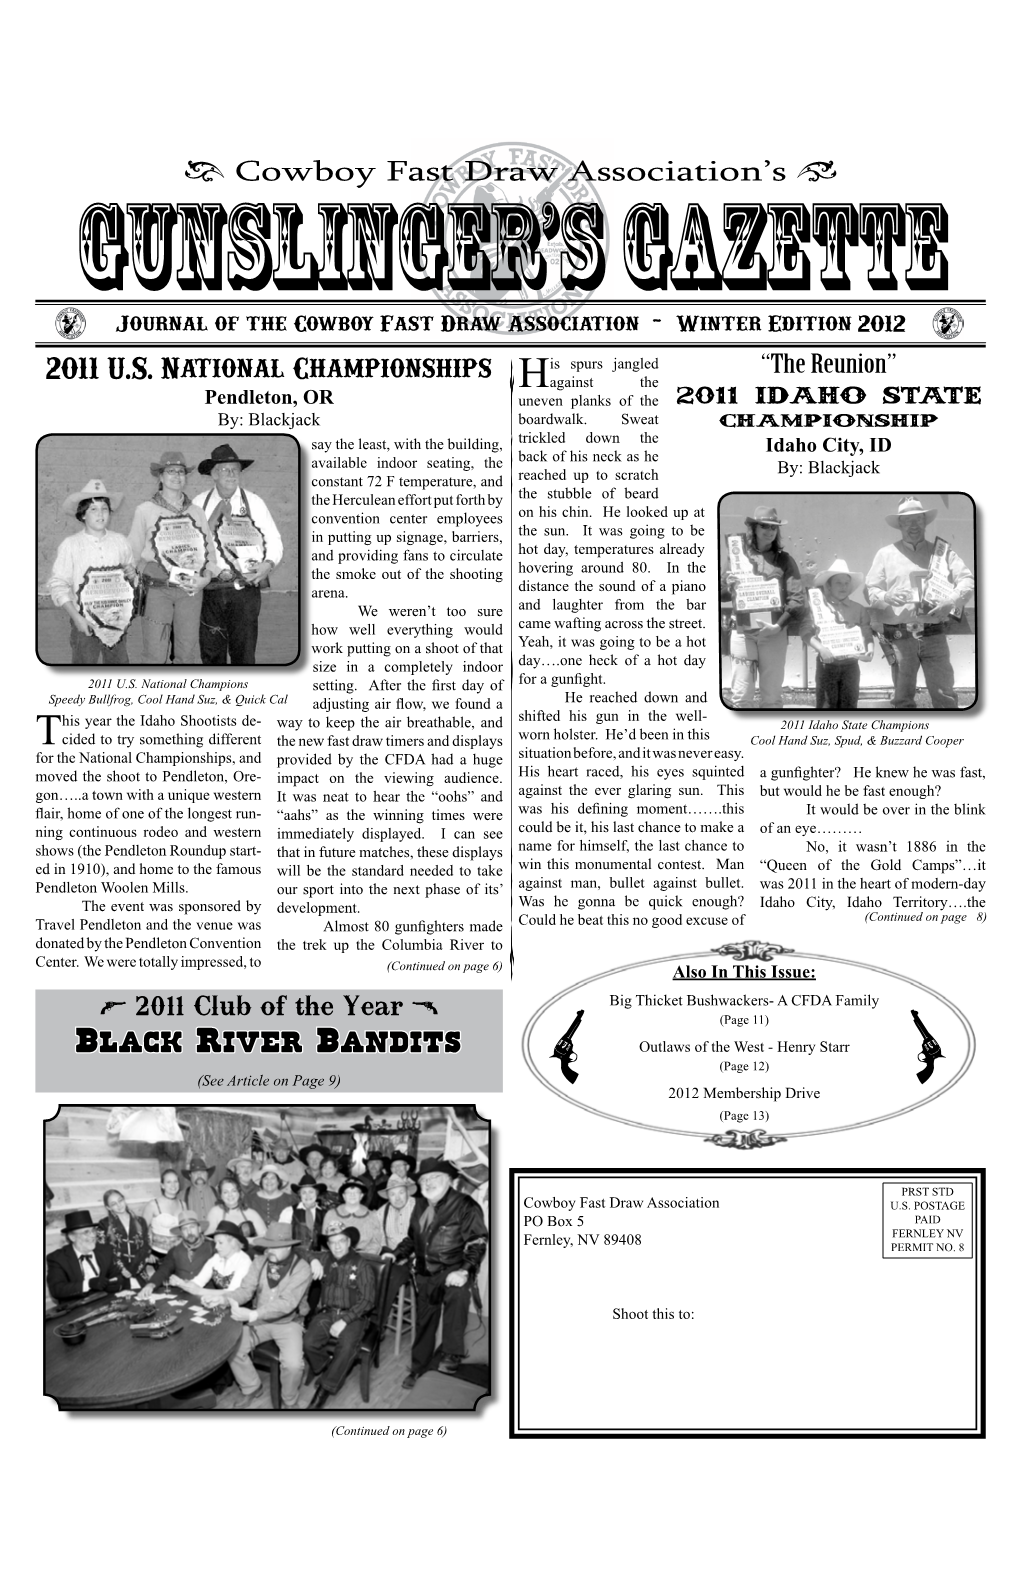 Black River Bandits 2011 U.S. National Championships